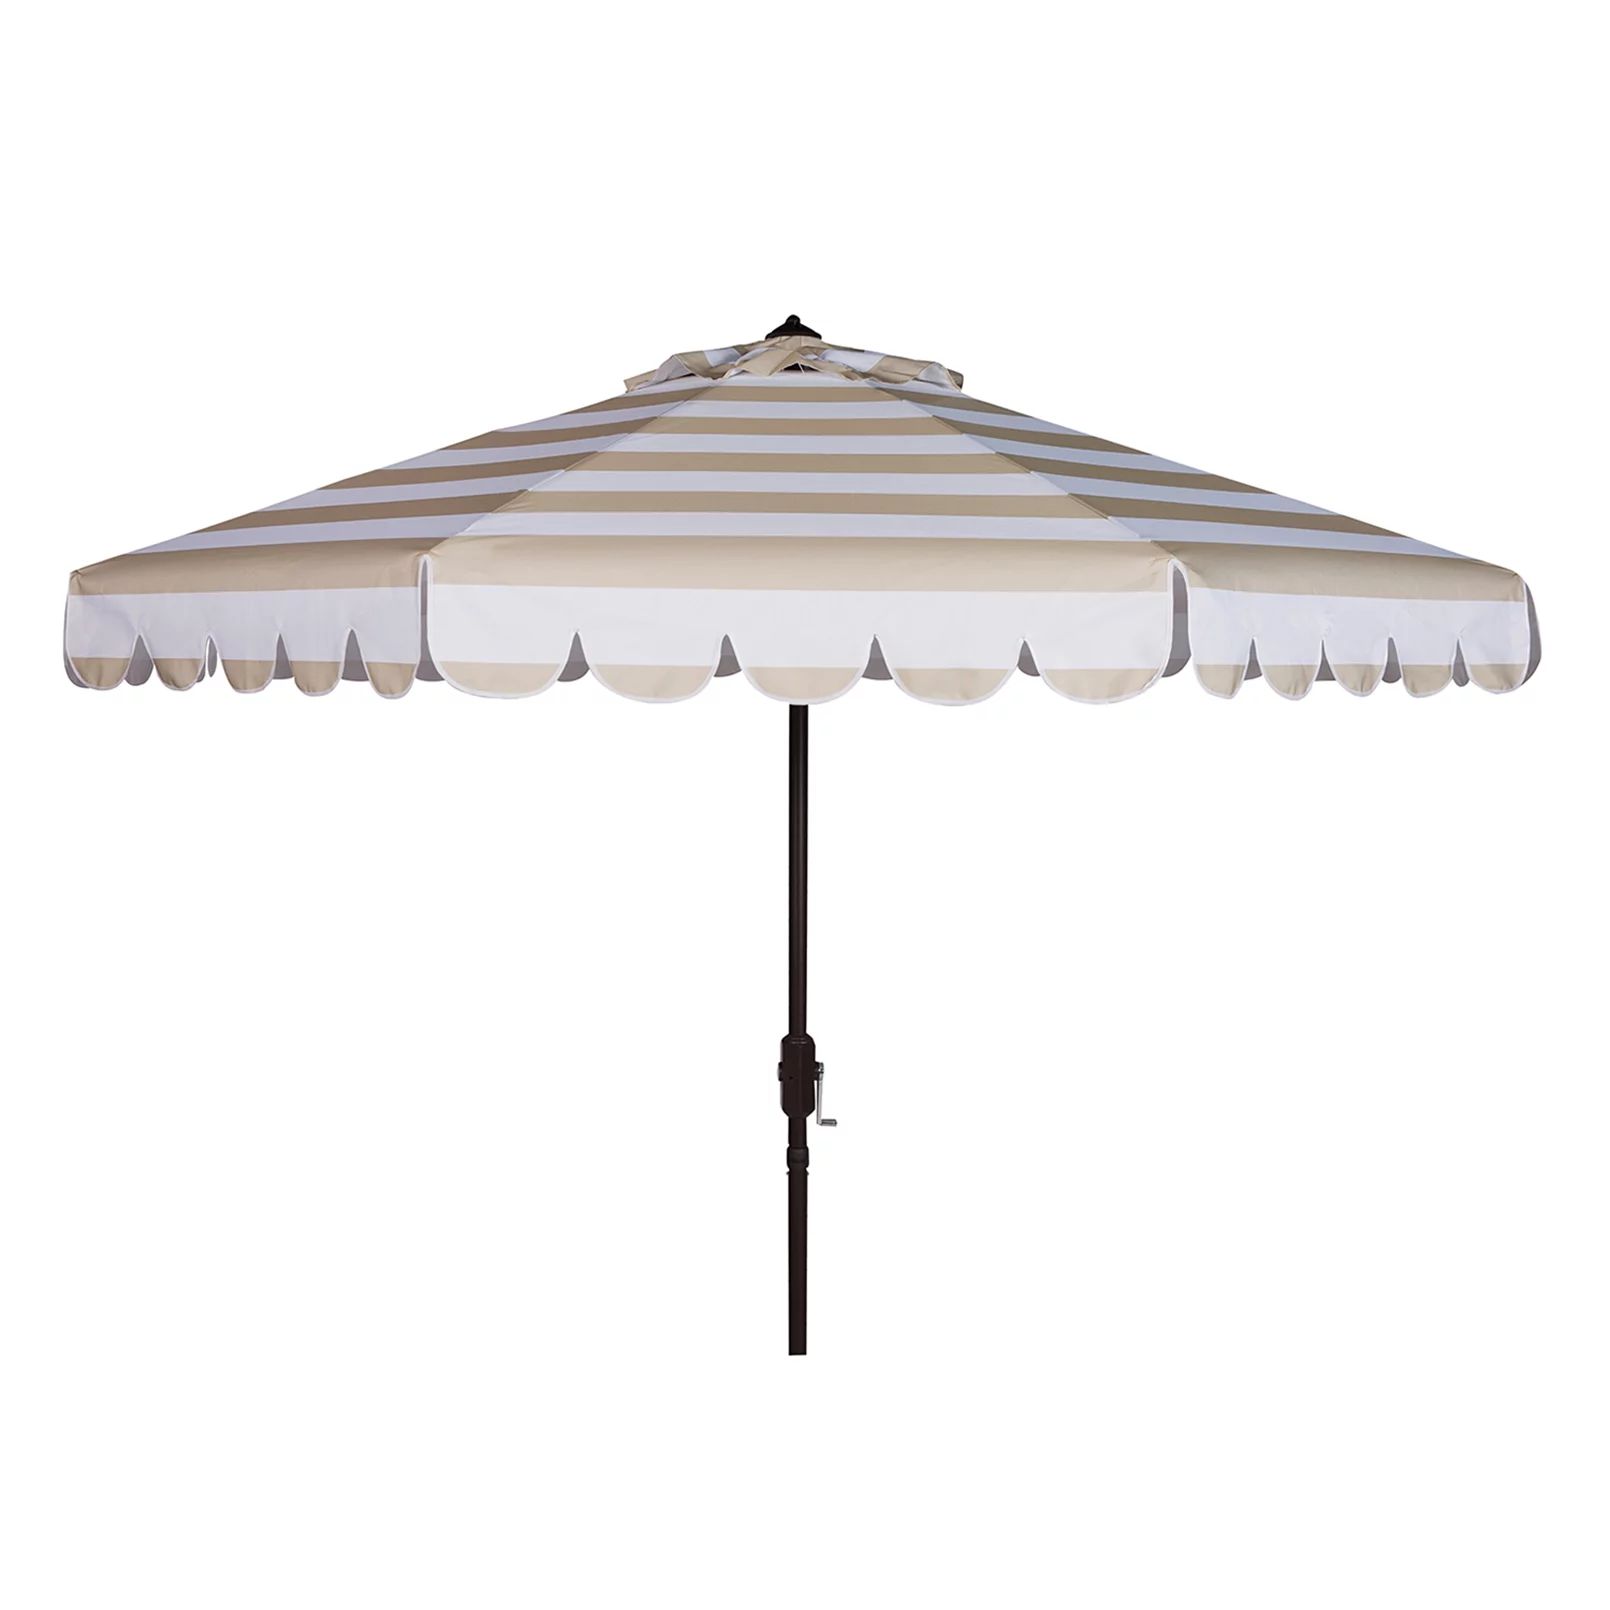 Safavieh 9-ft. Striped Scalloped Trim Patio Umbrella | Kohl's